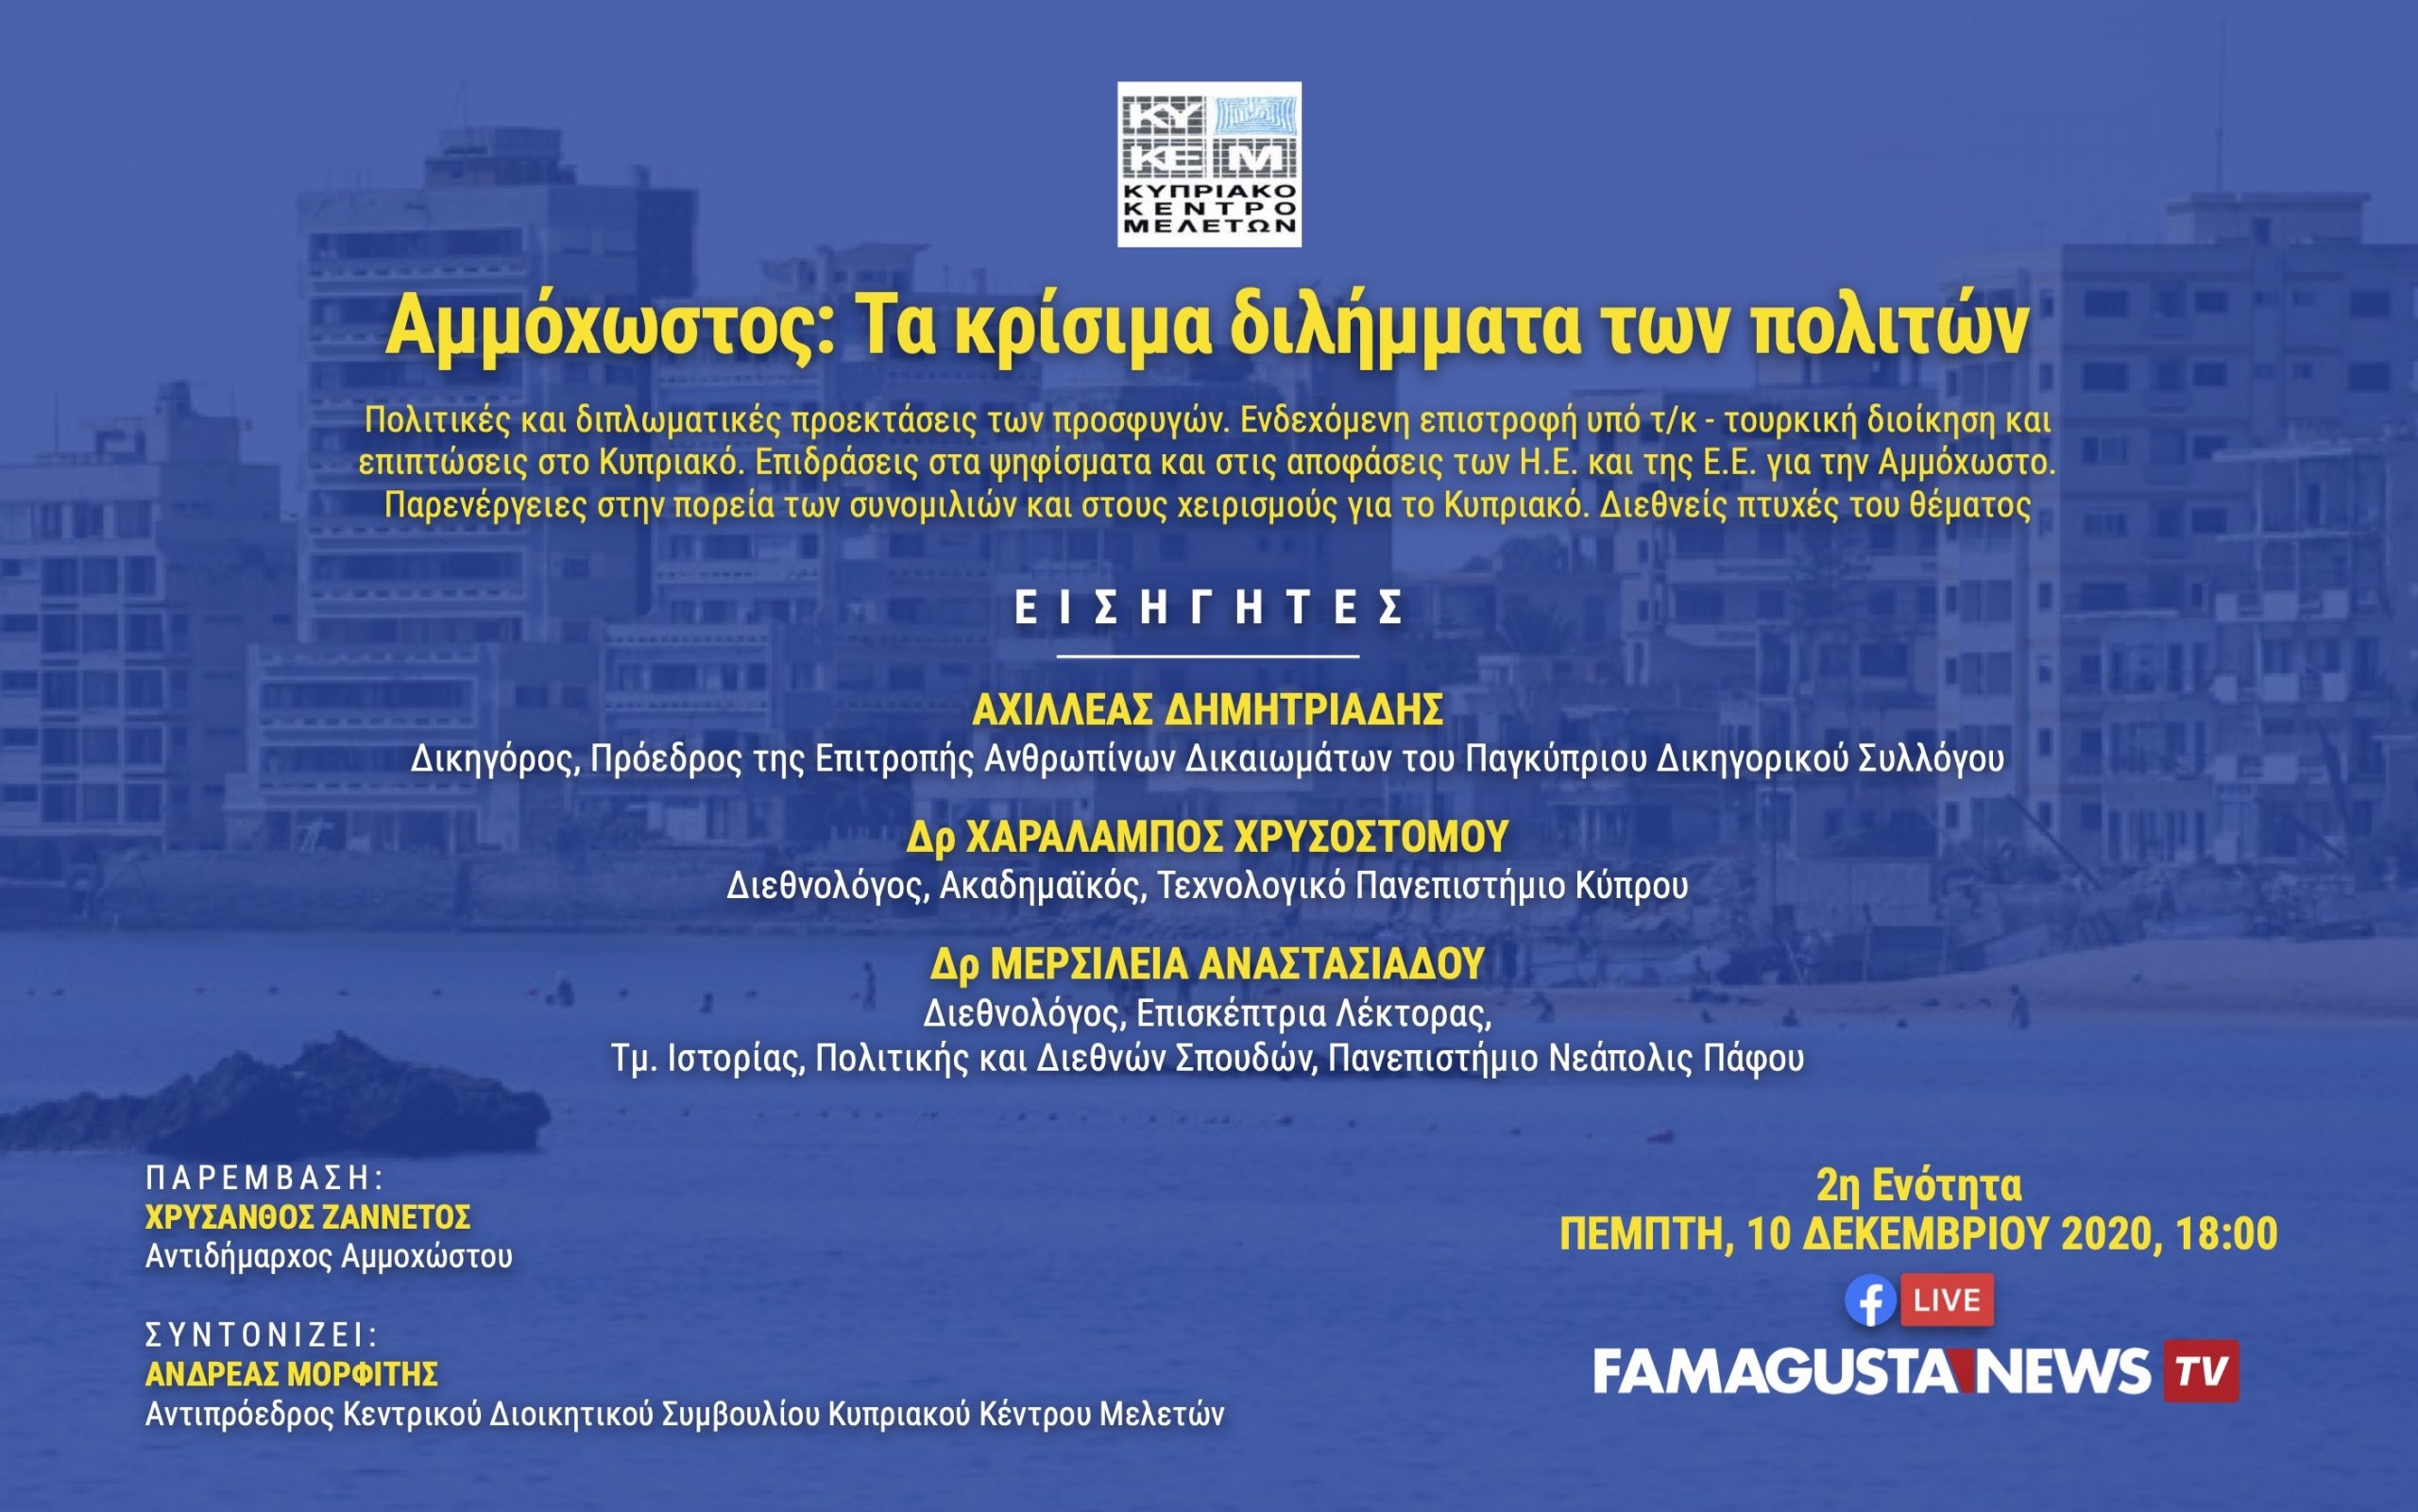 KYKEM ENOTHTA 2 scaled Famagusta